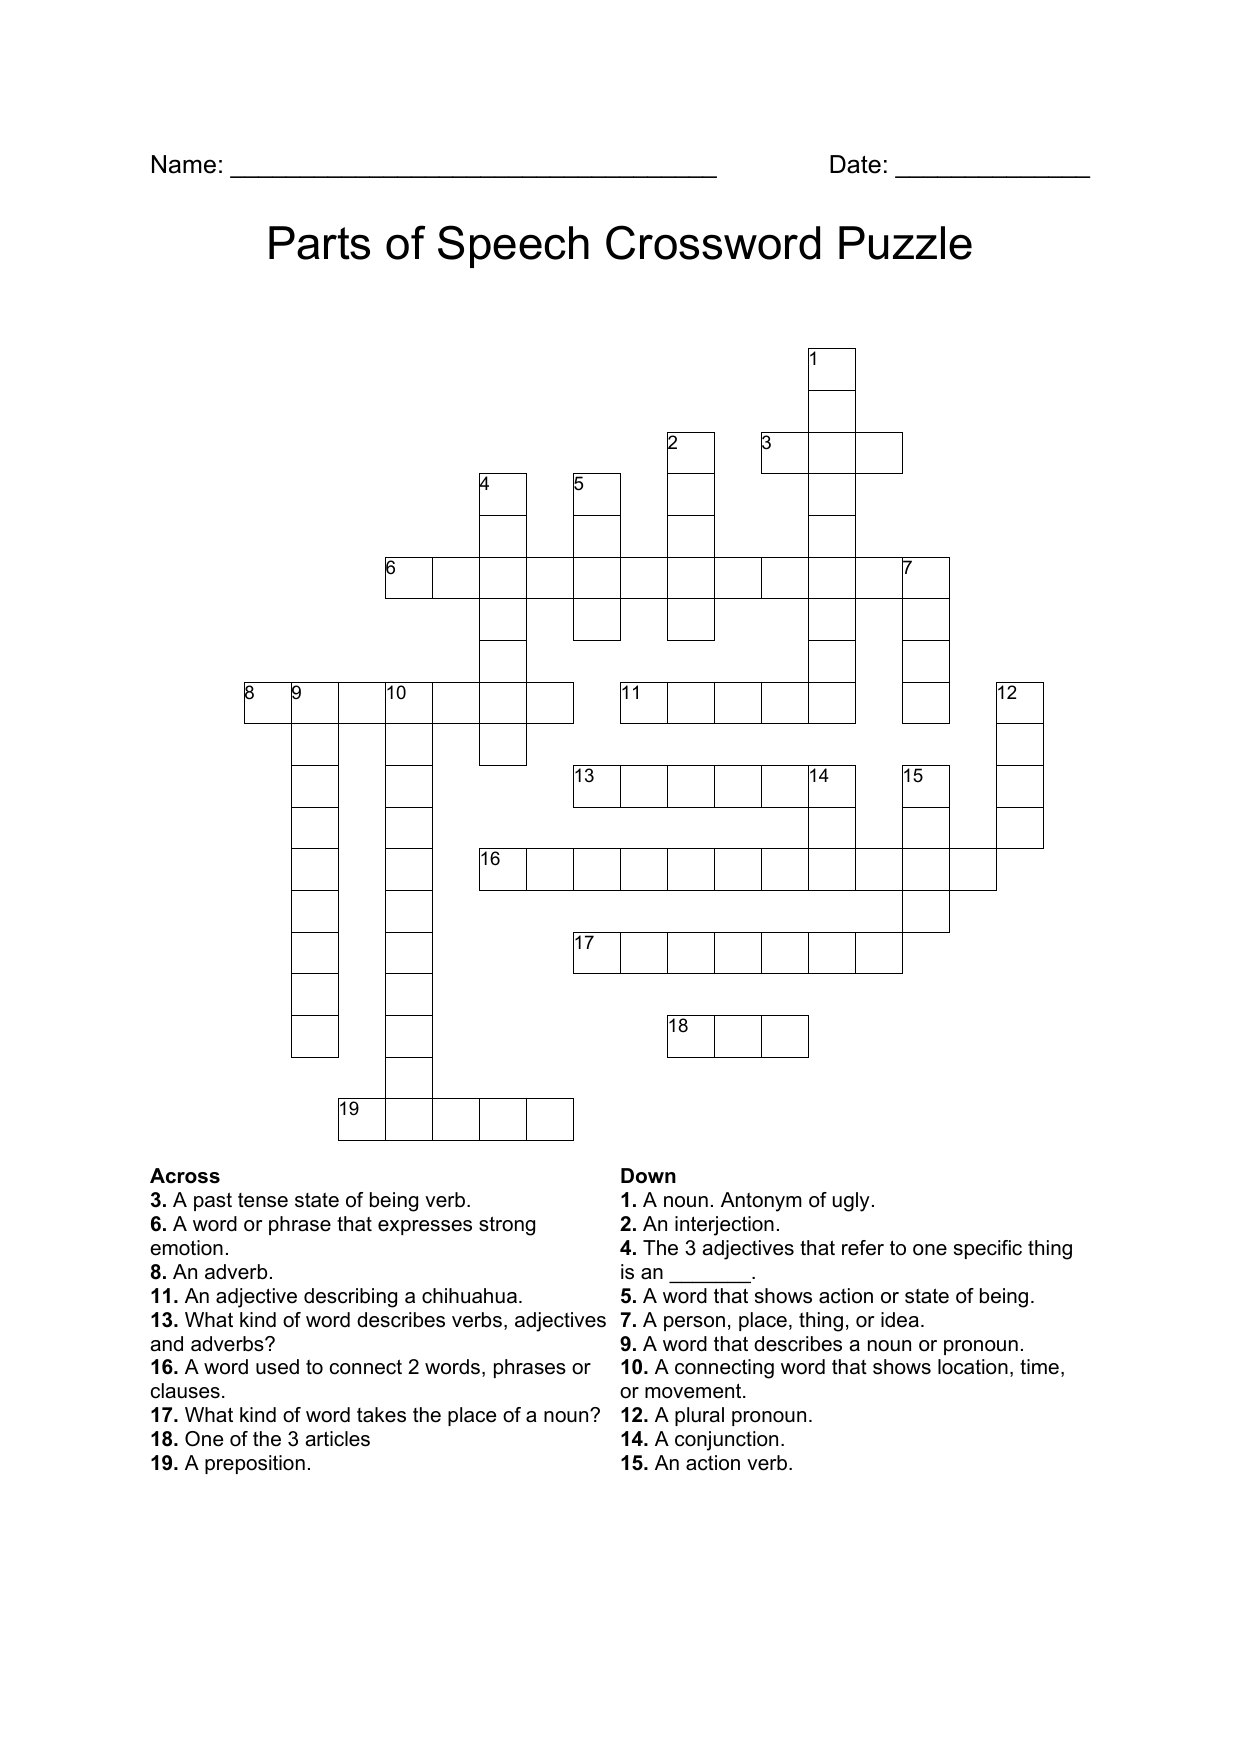 parts-of-speech-crossword-puzzle